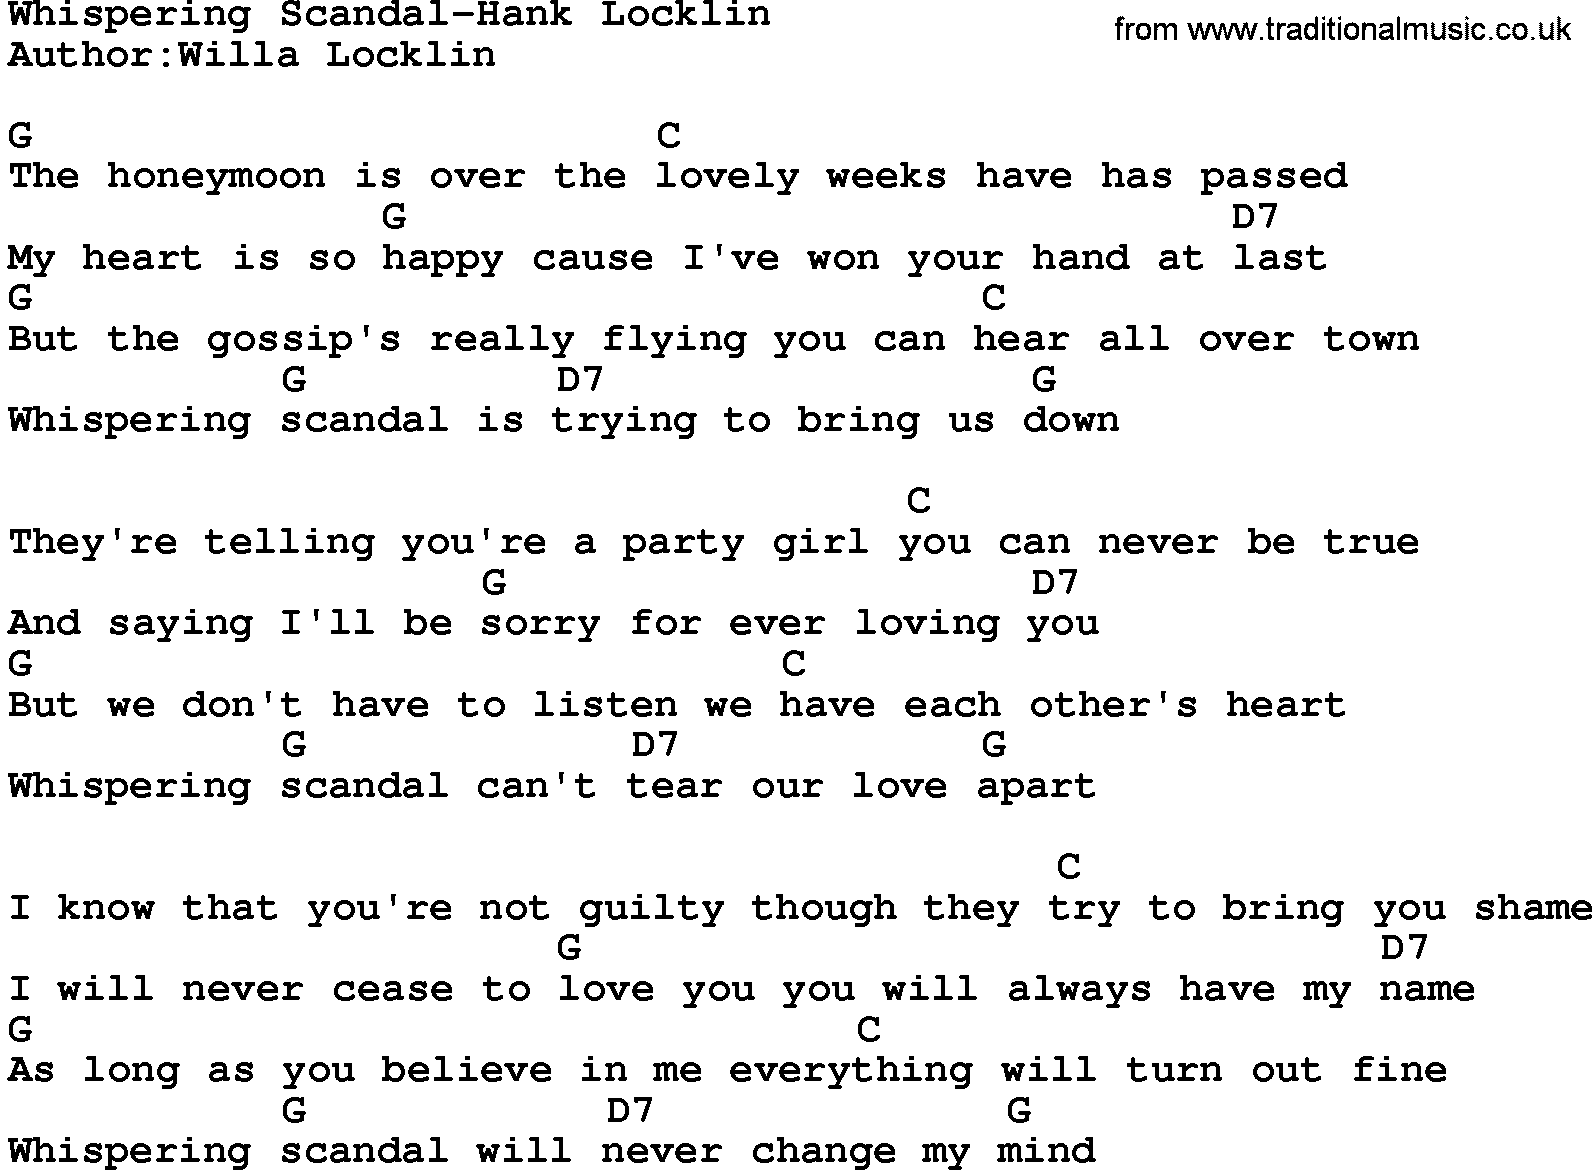 Country music song: Whispering Scandal-Hank Locklin lyrics and chords